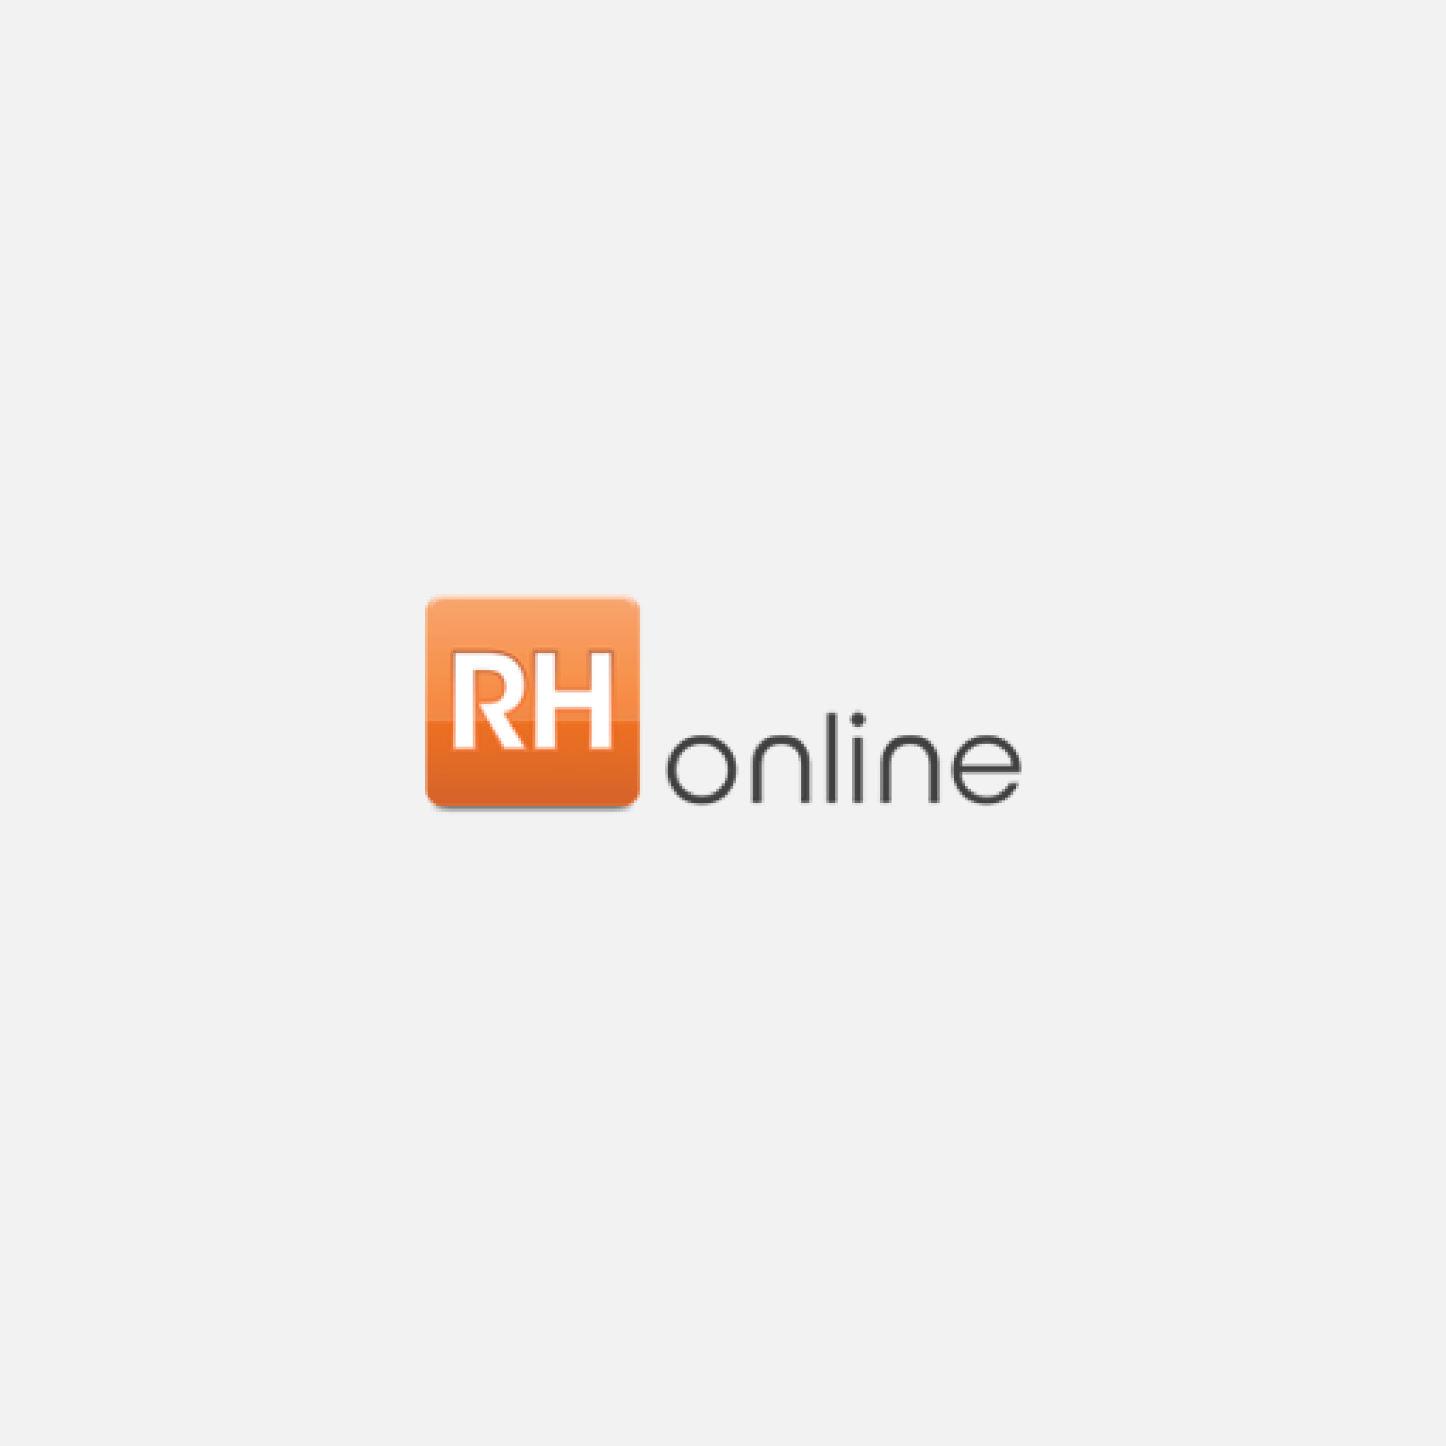 RH online